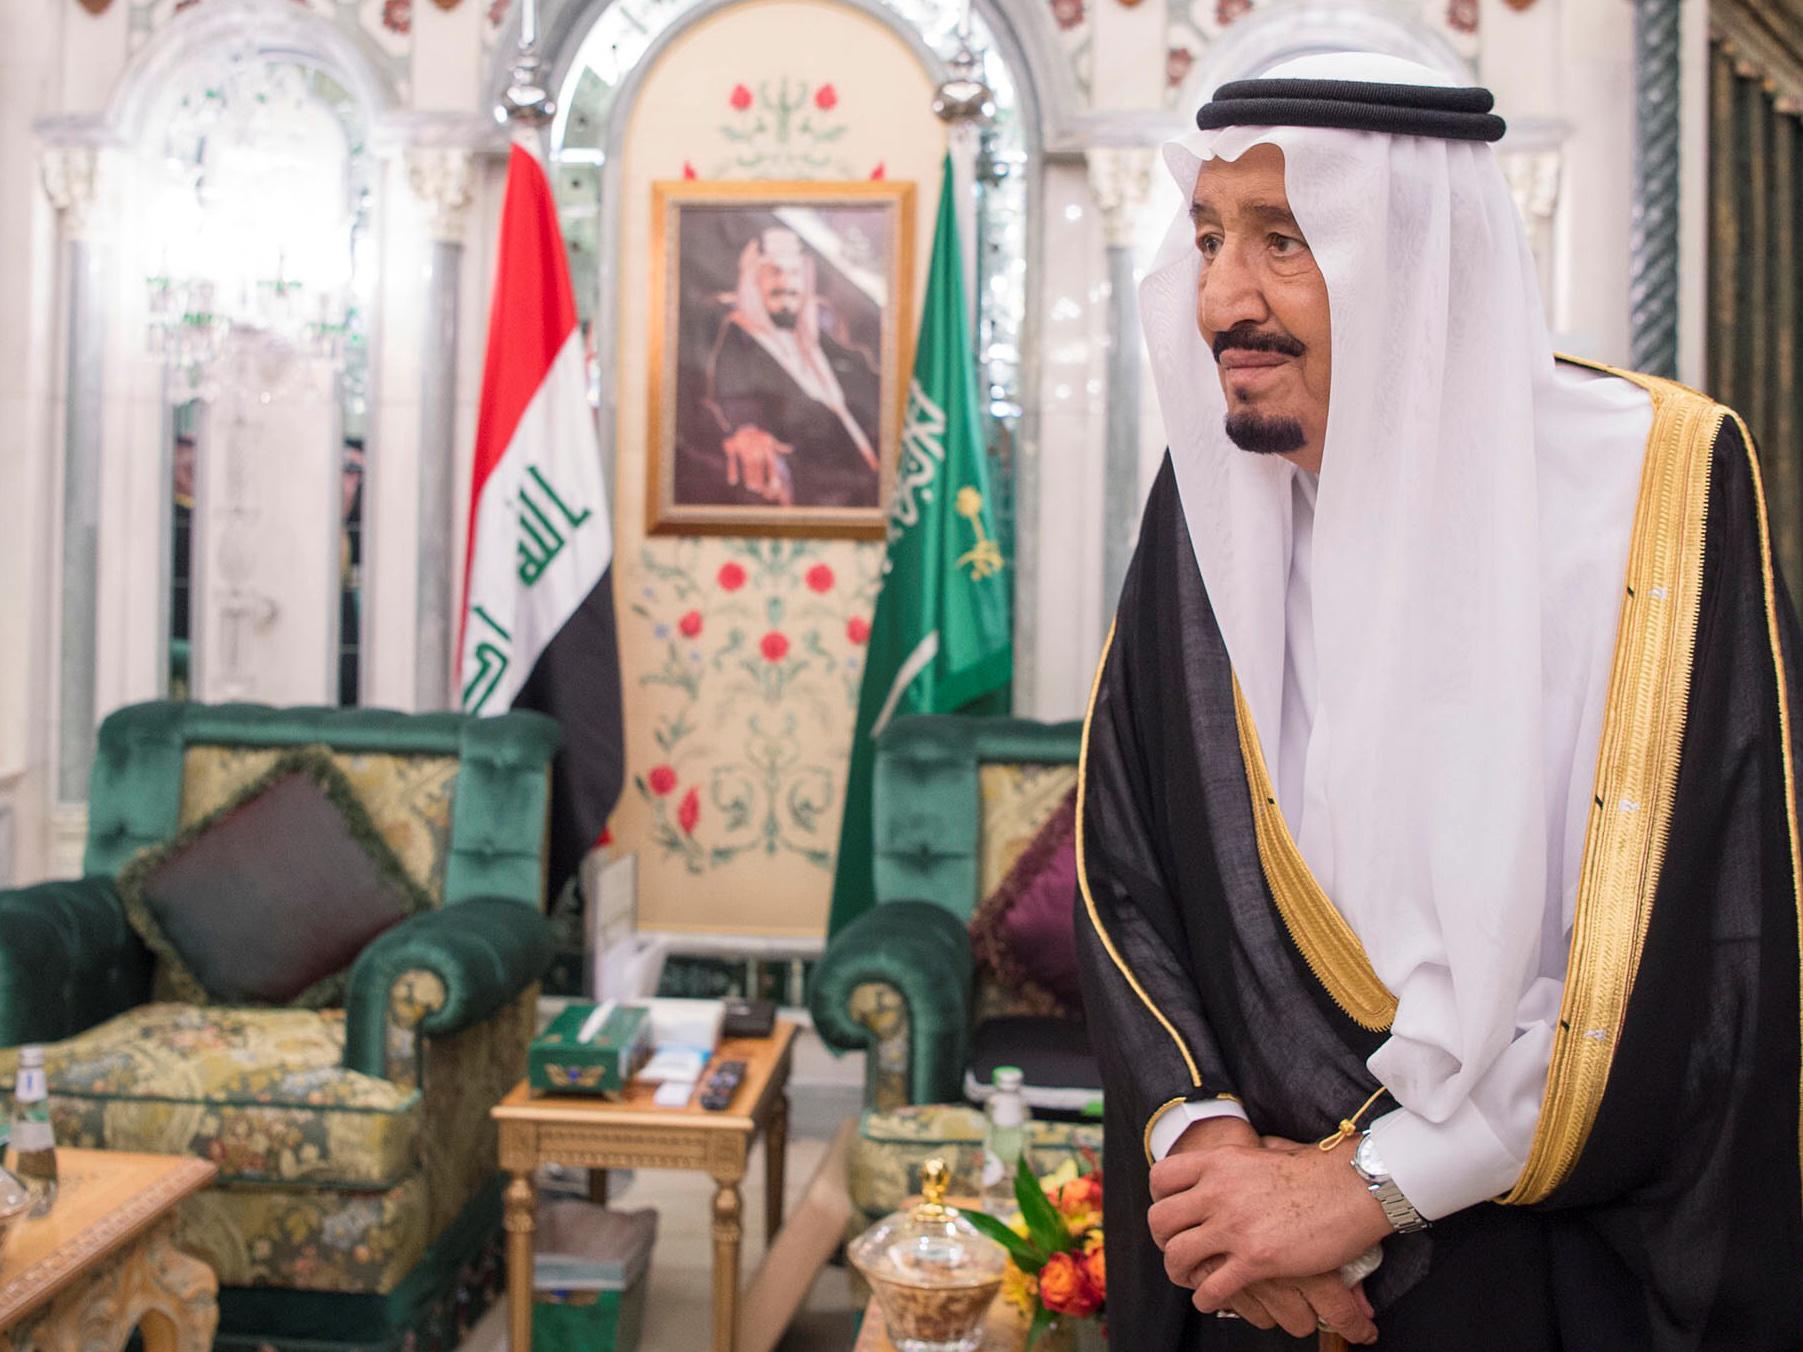 The 14 men will be executed if Saudi Arabia's King Salman bin Abdulaziz Al Saud signs-off on the death penalty sentence